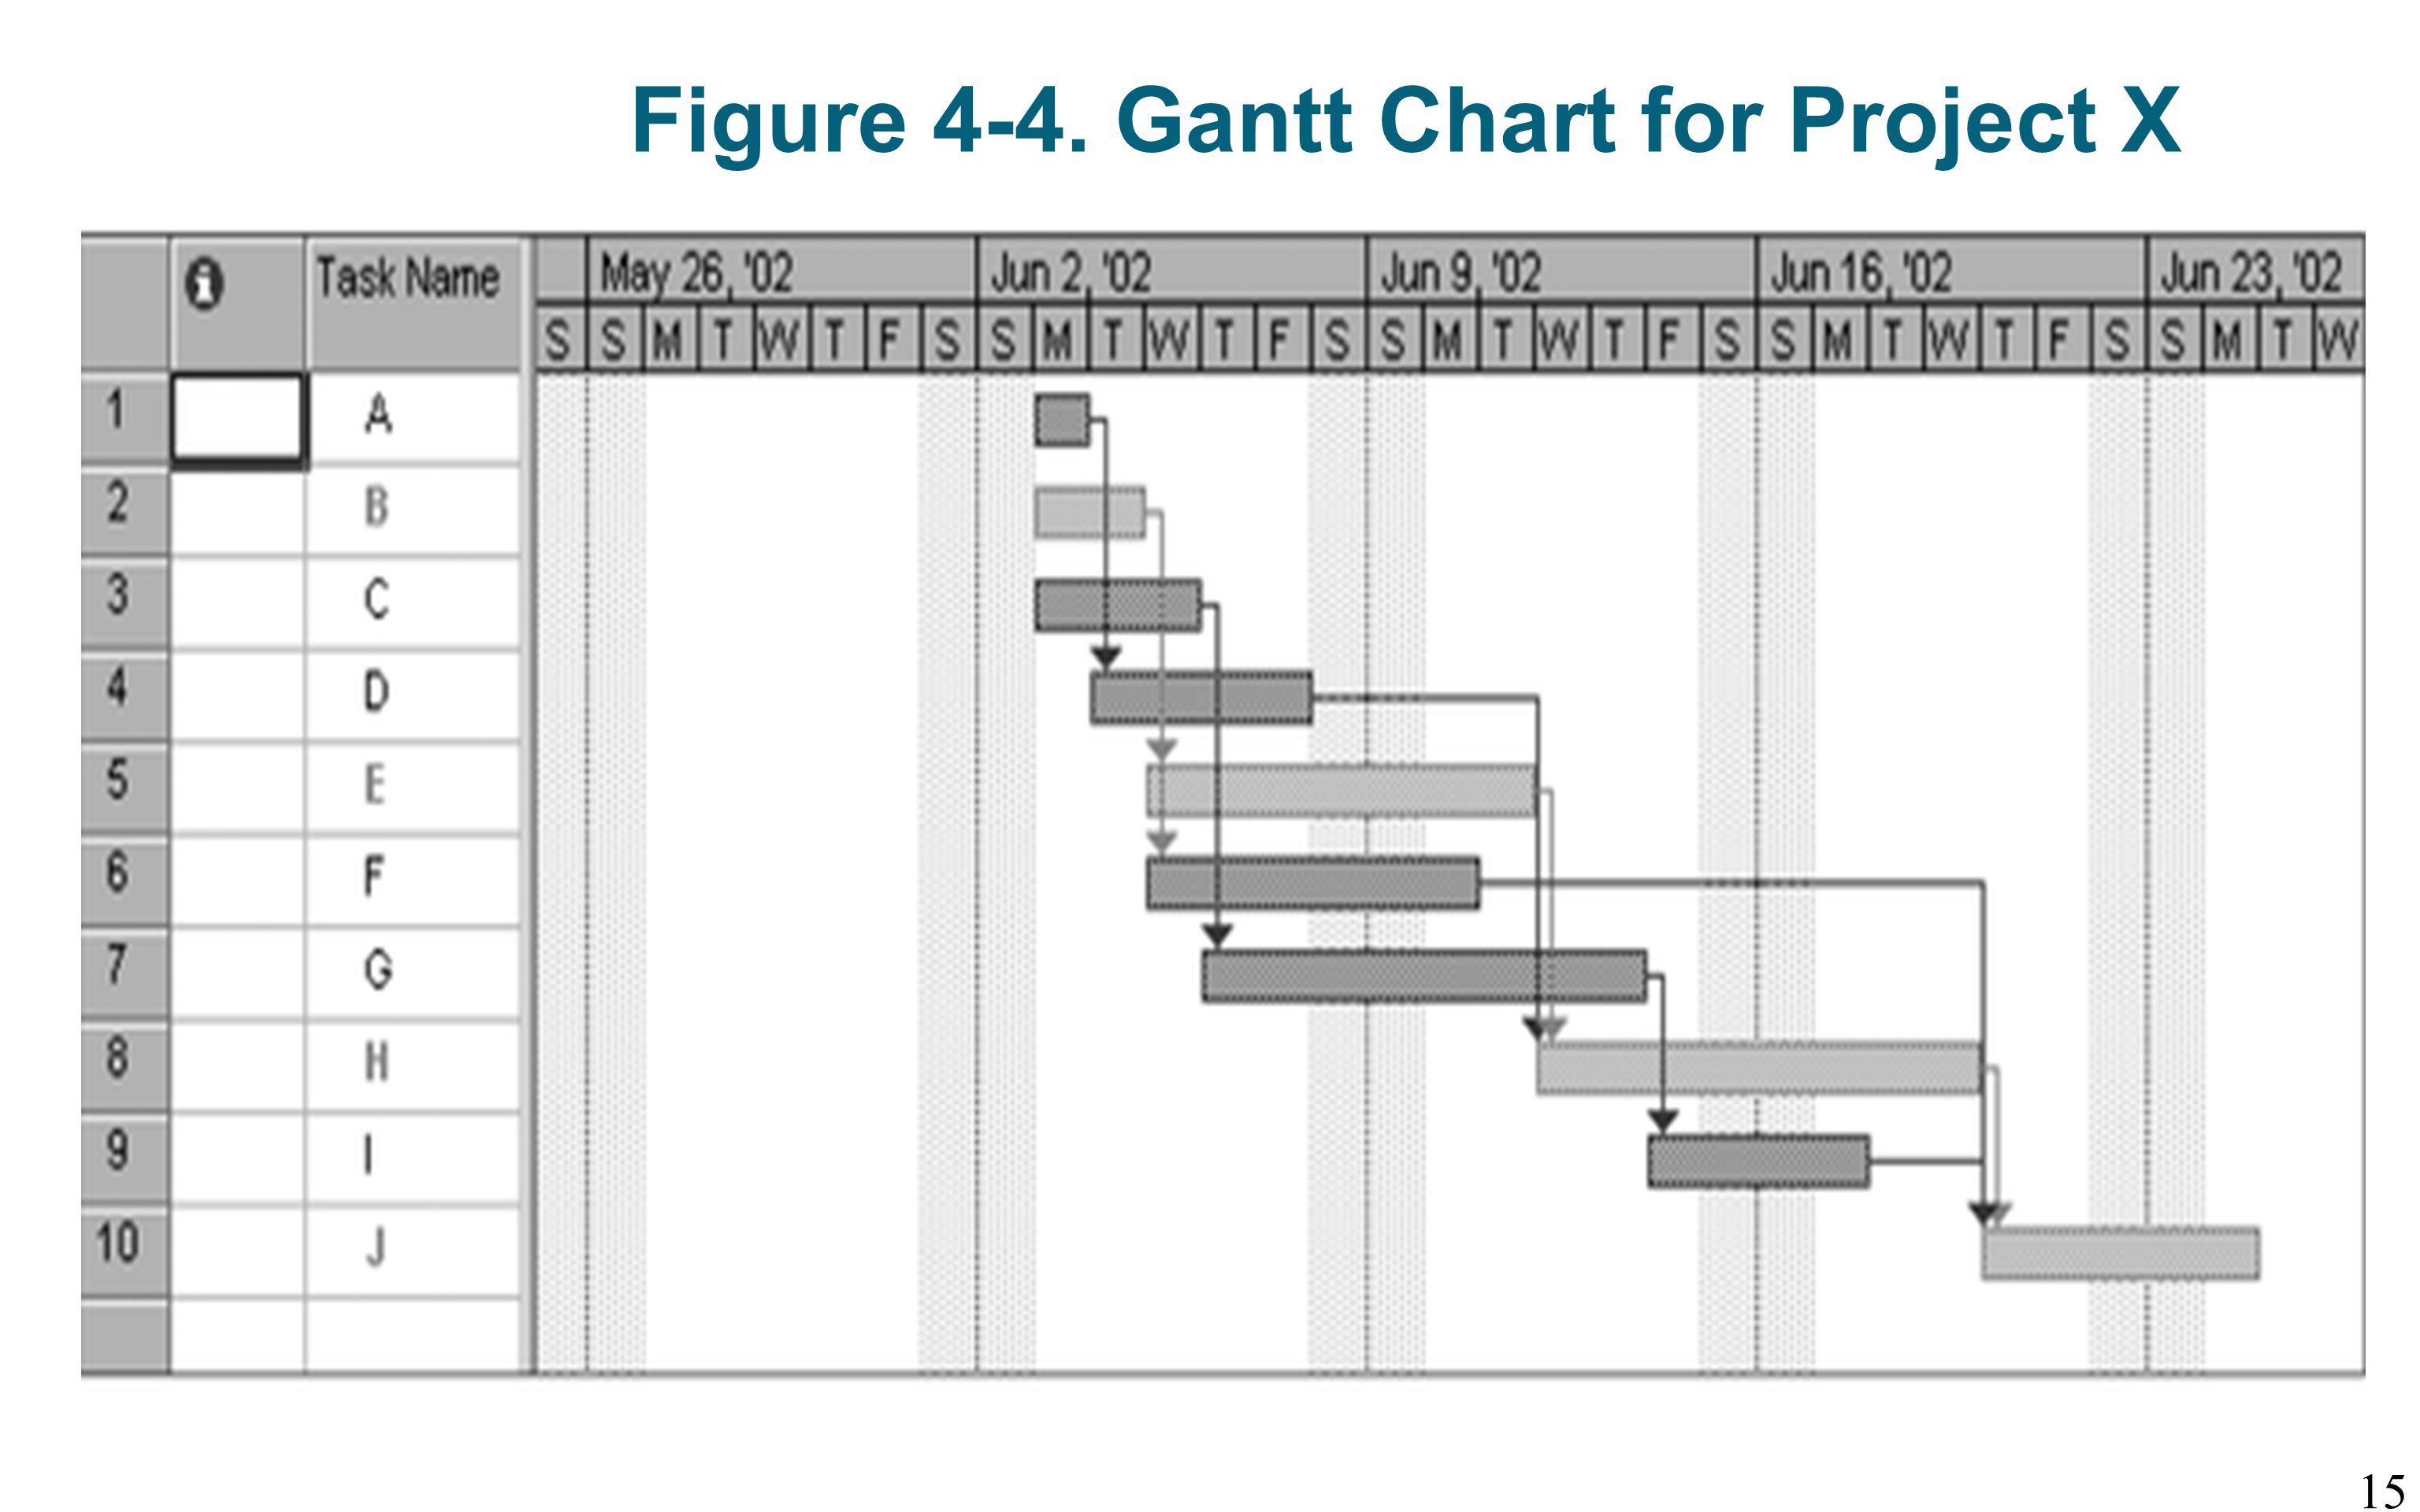 Figure 4-4. Gantt Chart for Project X